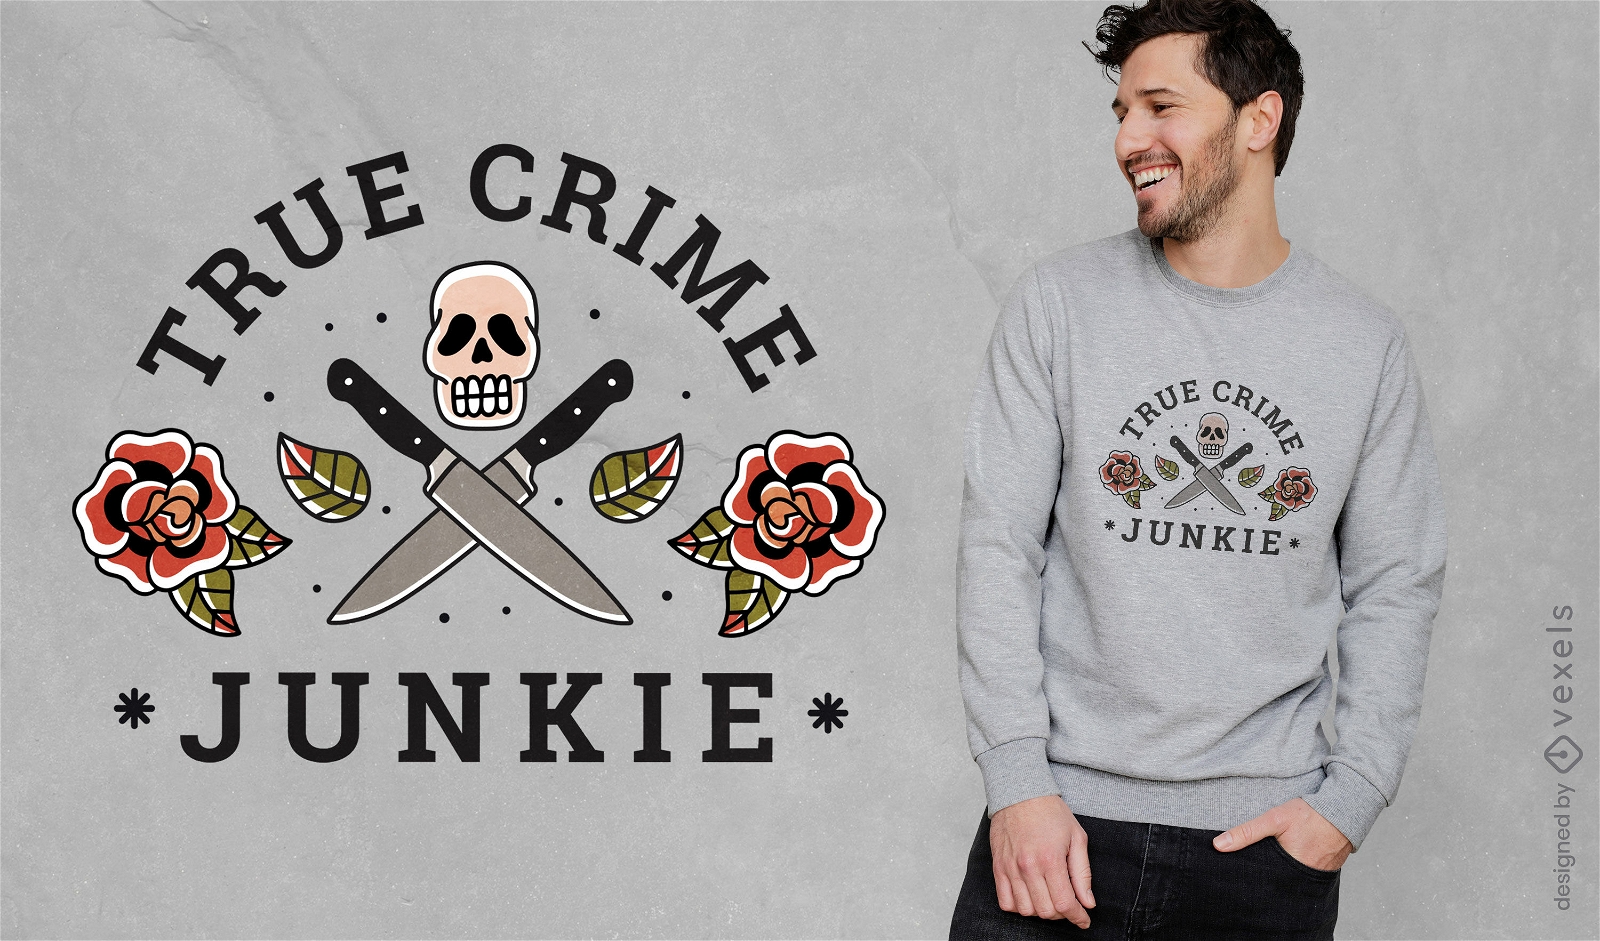 True crime junkie t-shirt design